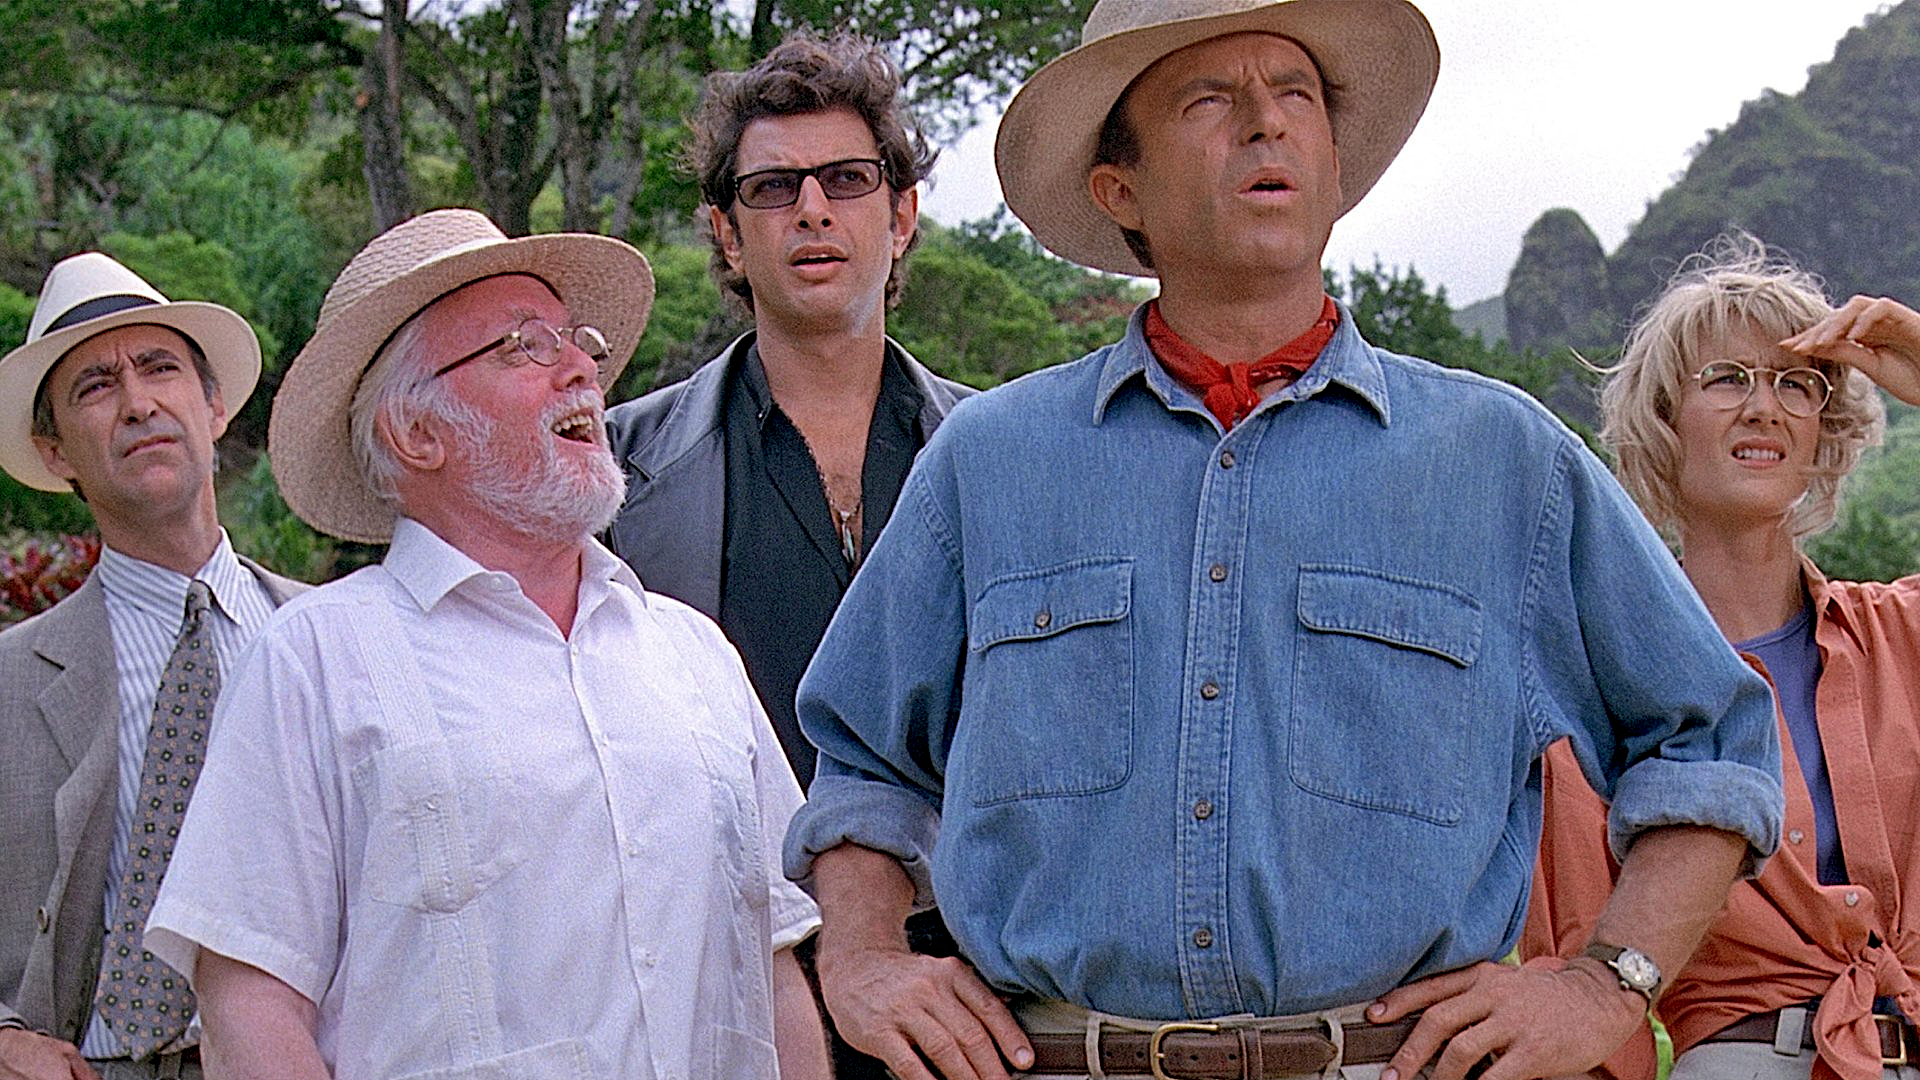 The cast of Steven Spielberg's Jurassic Park.